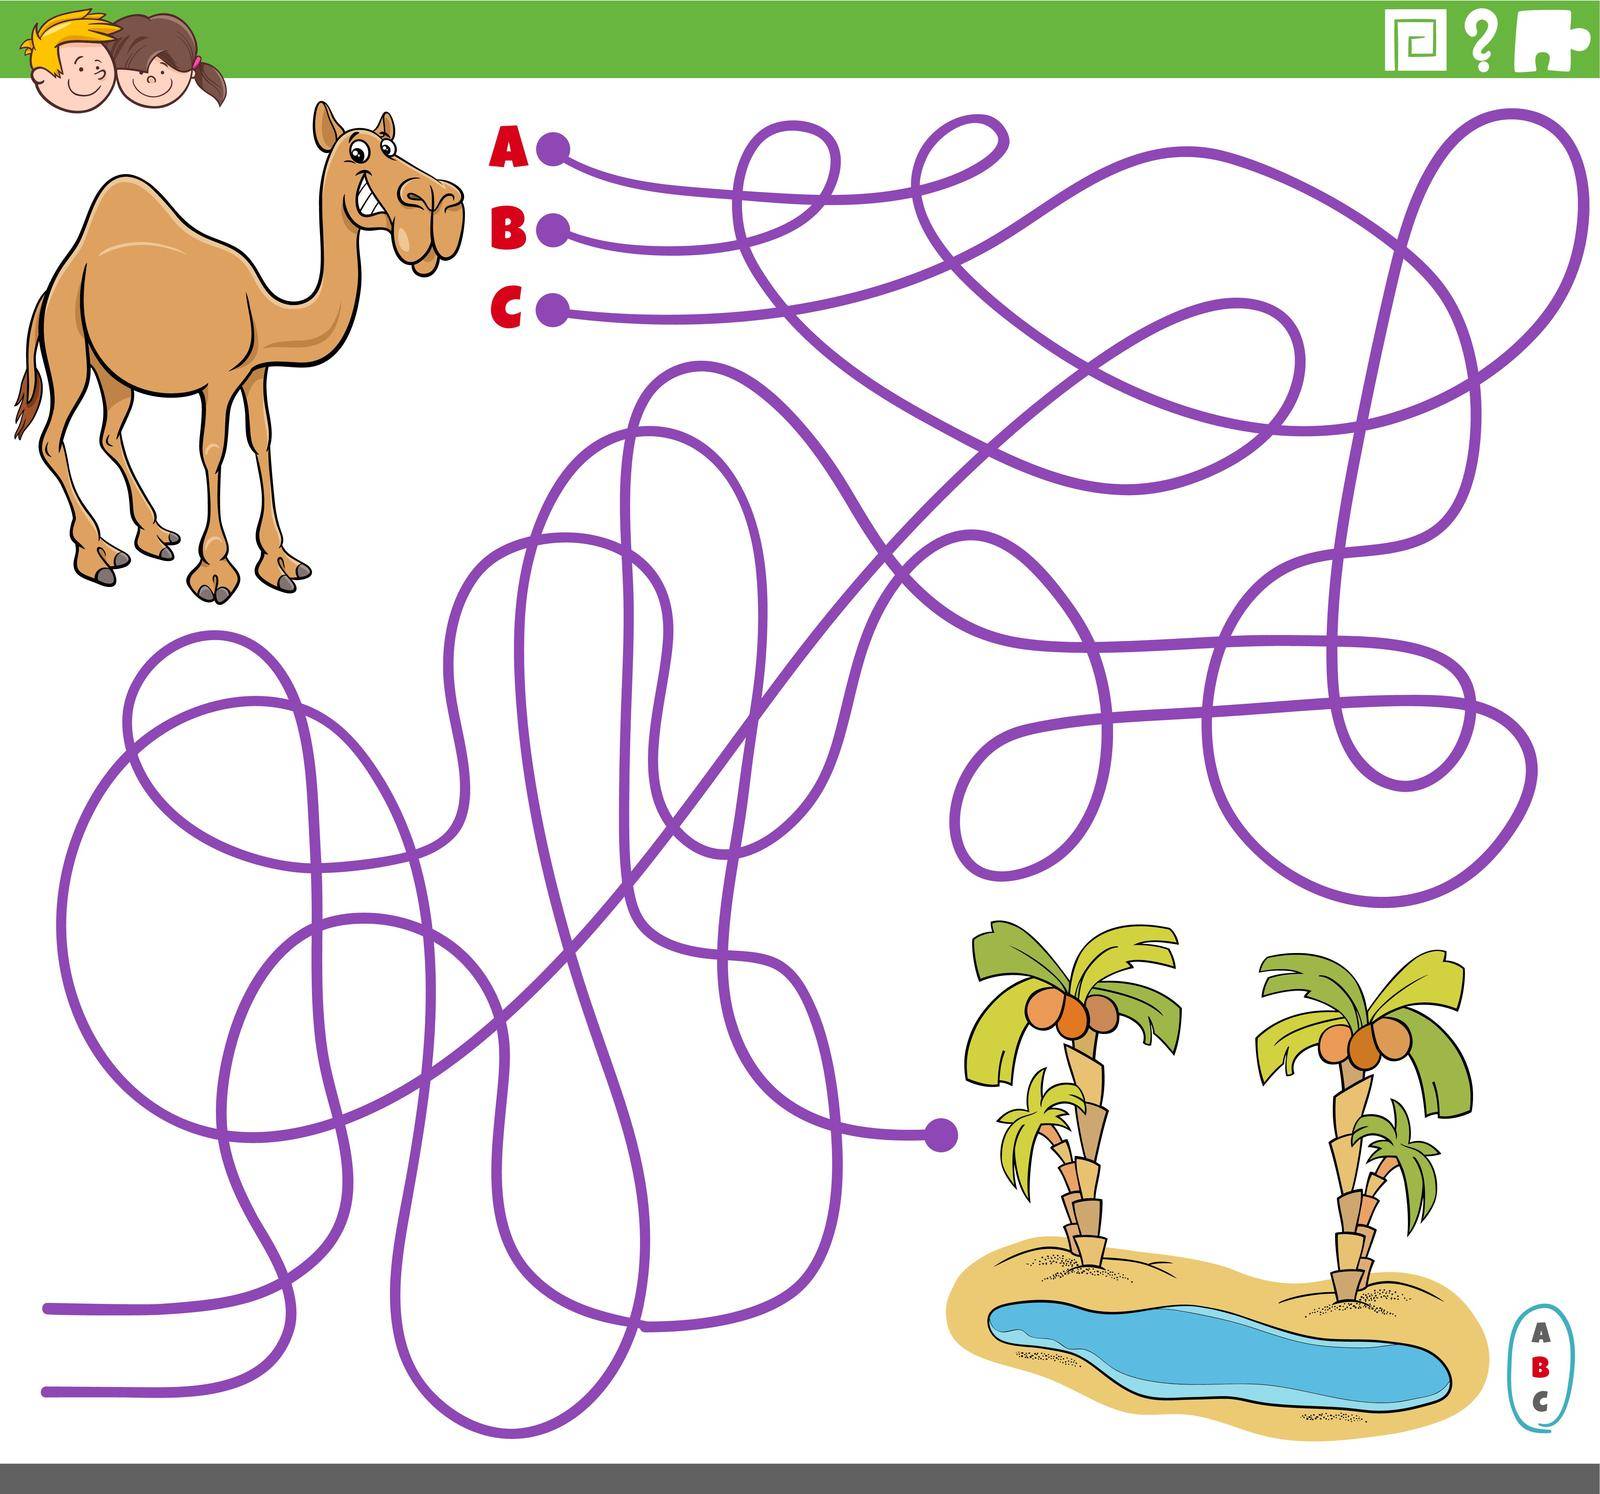 educational maze game with cartoon camel and oasis by izakowski